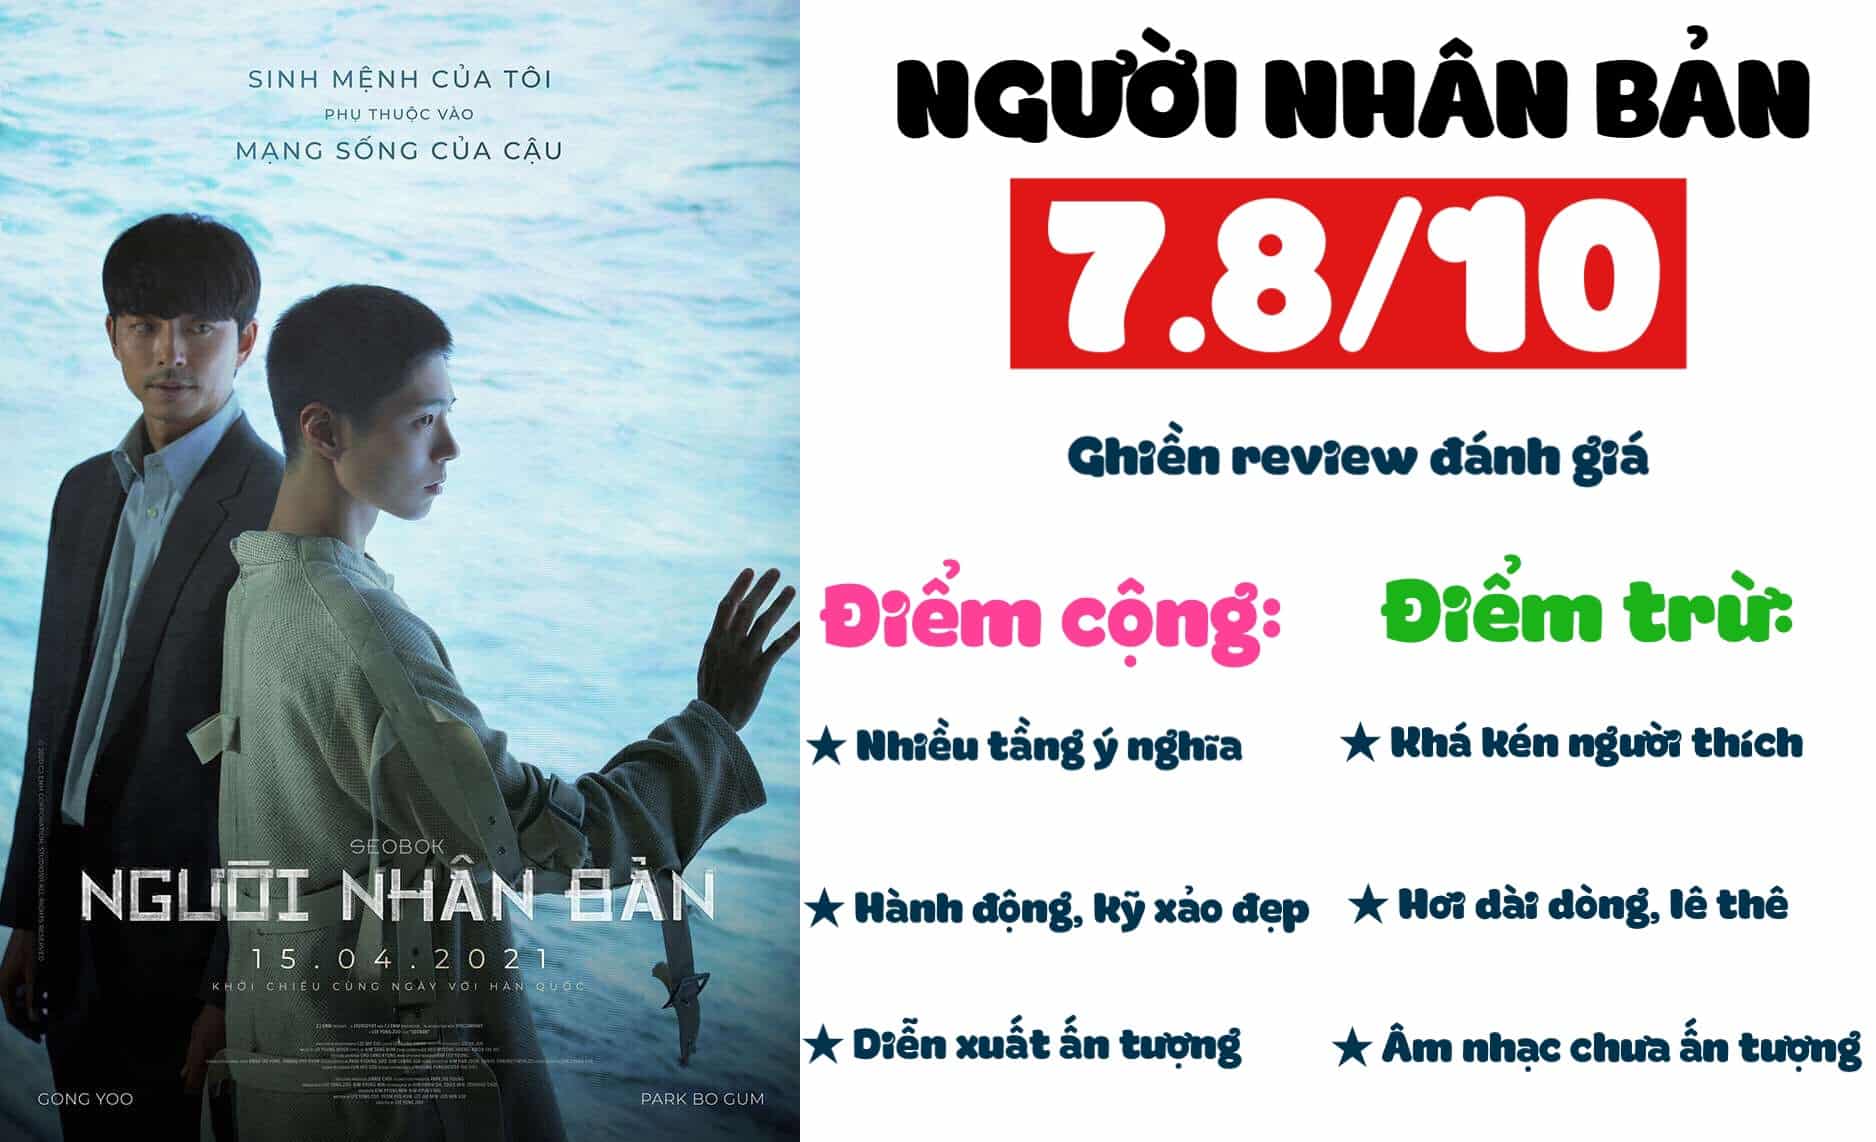 Ghien review - Nguoi nhan ban - Seobok